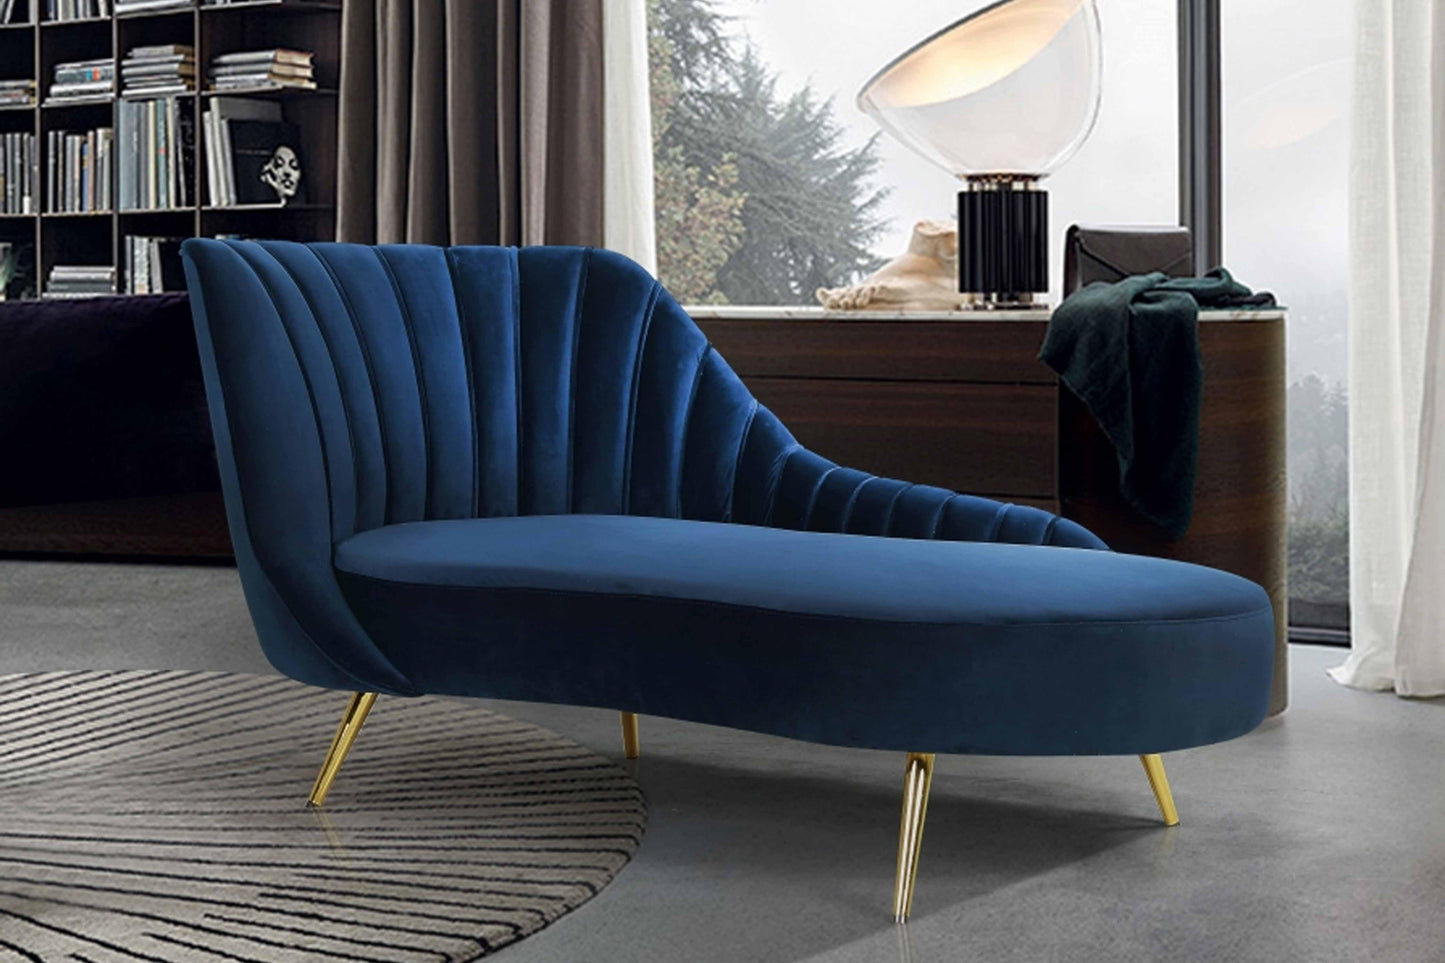 Margo Velvet Chaise Lounge SKU: 622-Chaise - Venini Furniture 